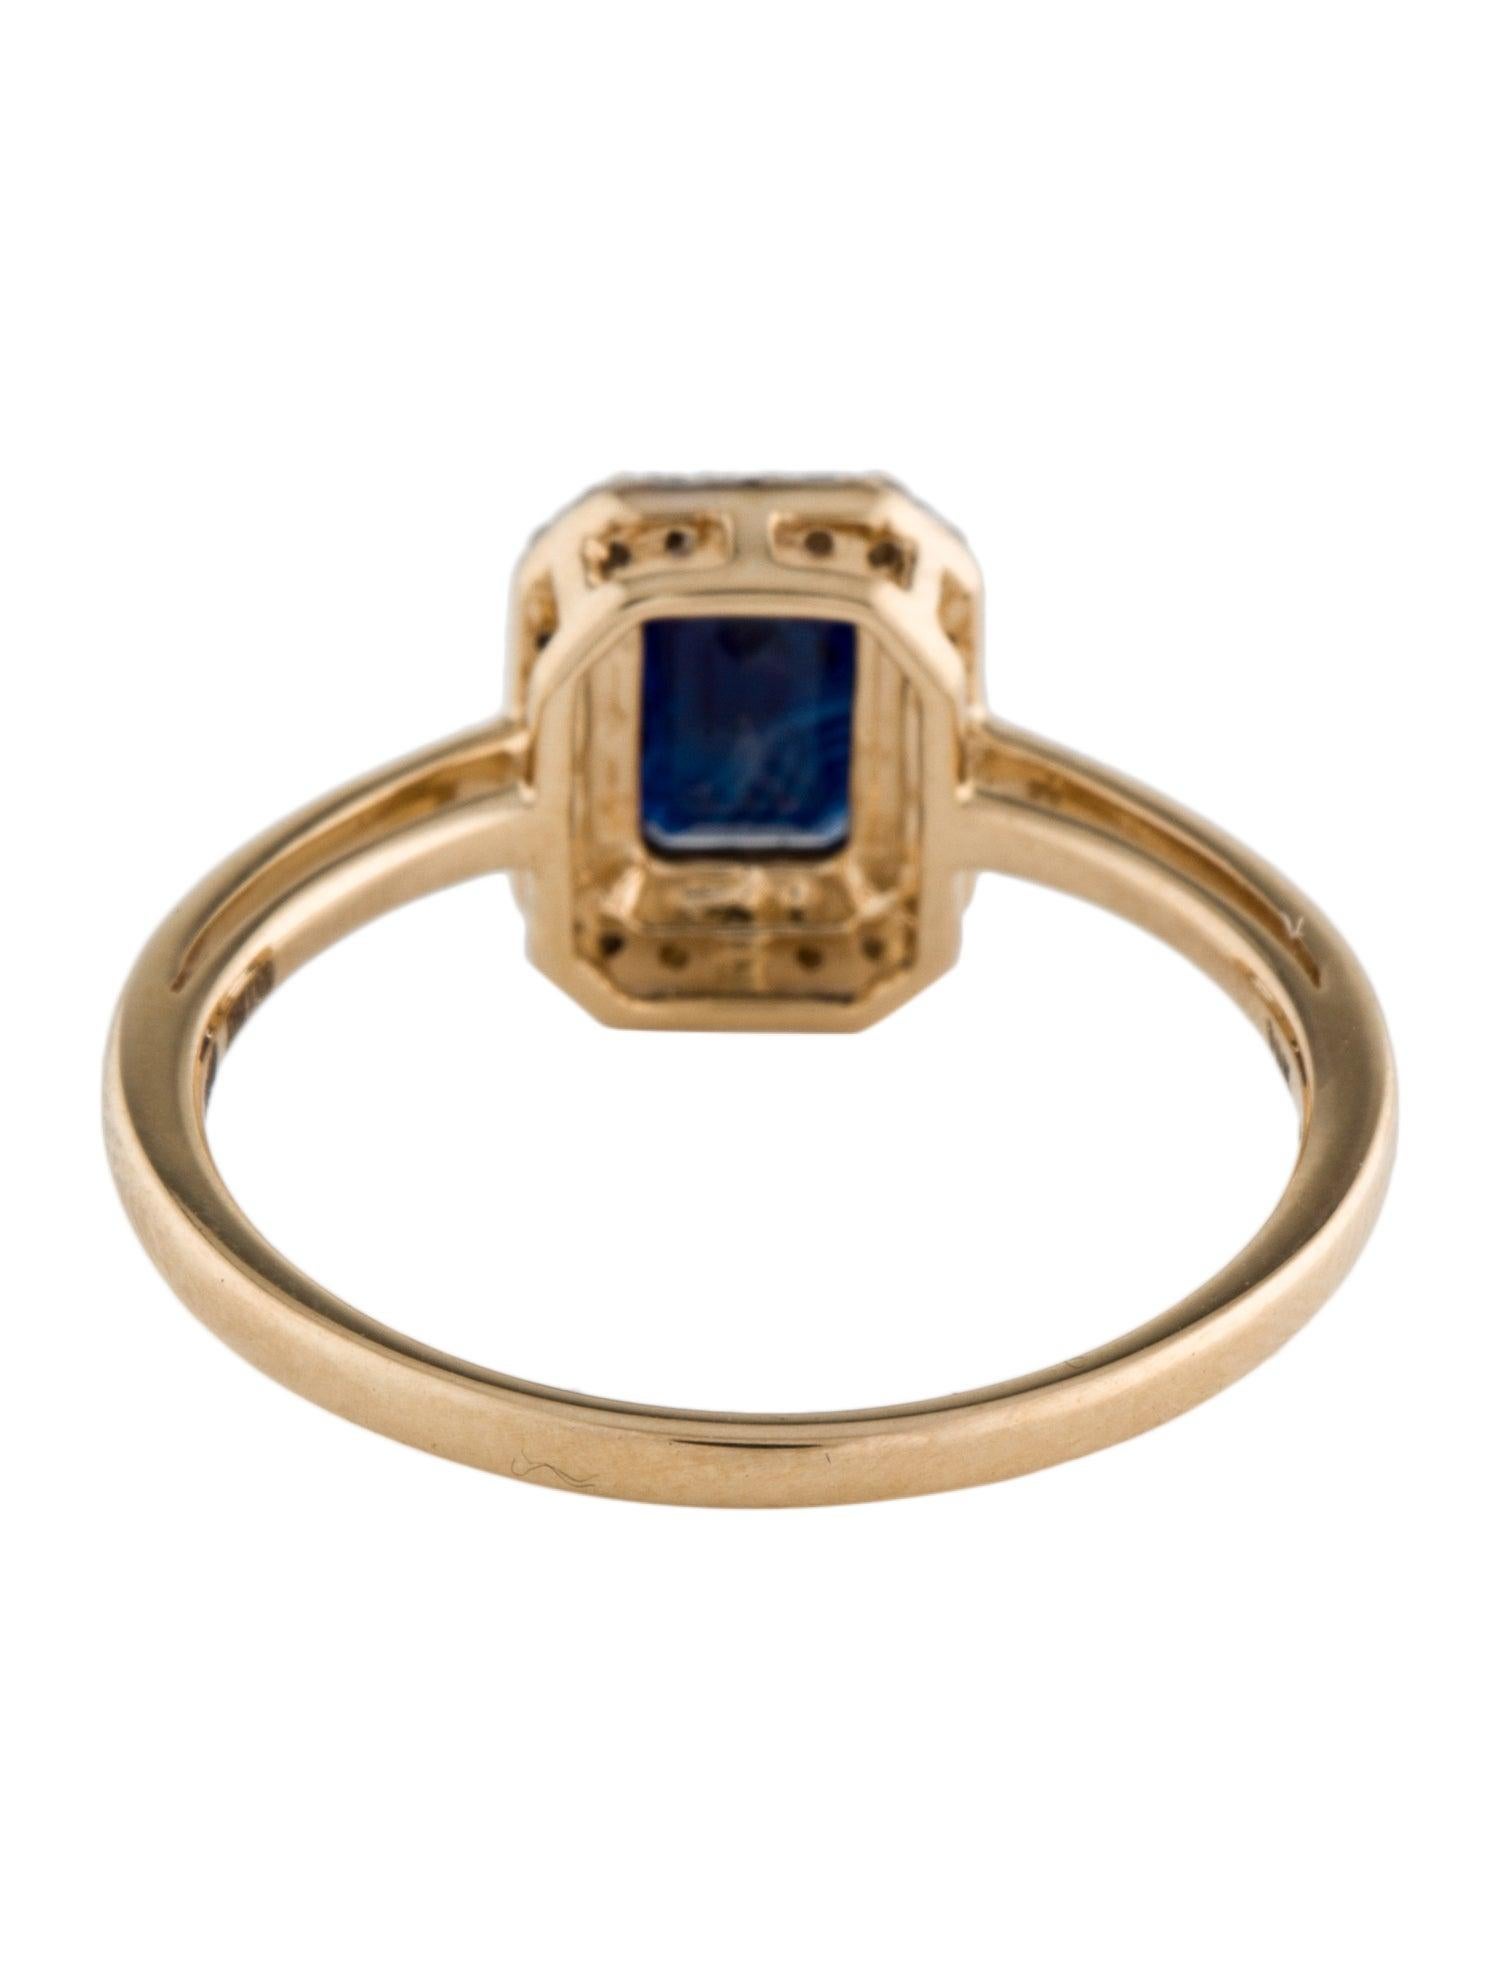 Women's Elegant 14K Yellow Gold Emerald Cut Sapphire & Diamond Cocktail Ring, 1.11ctw For Sale